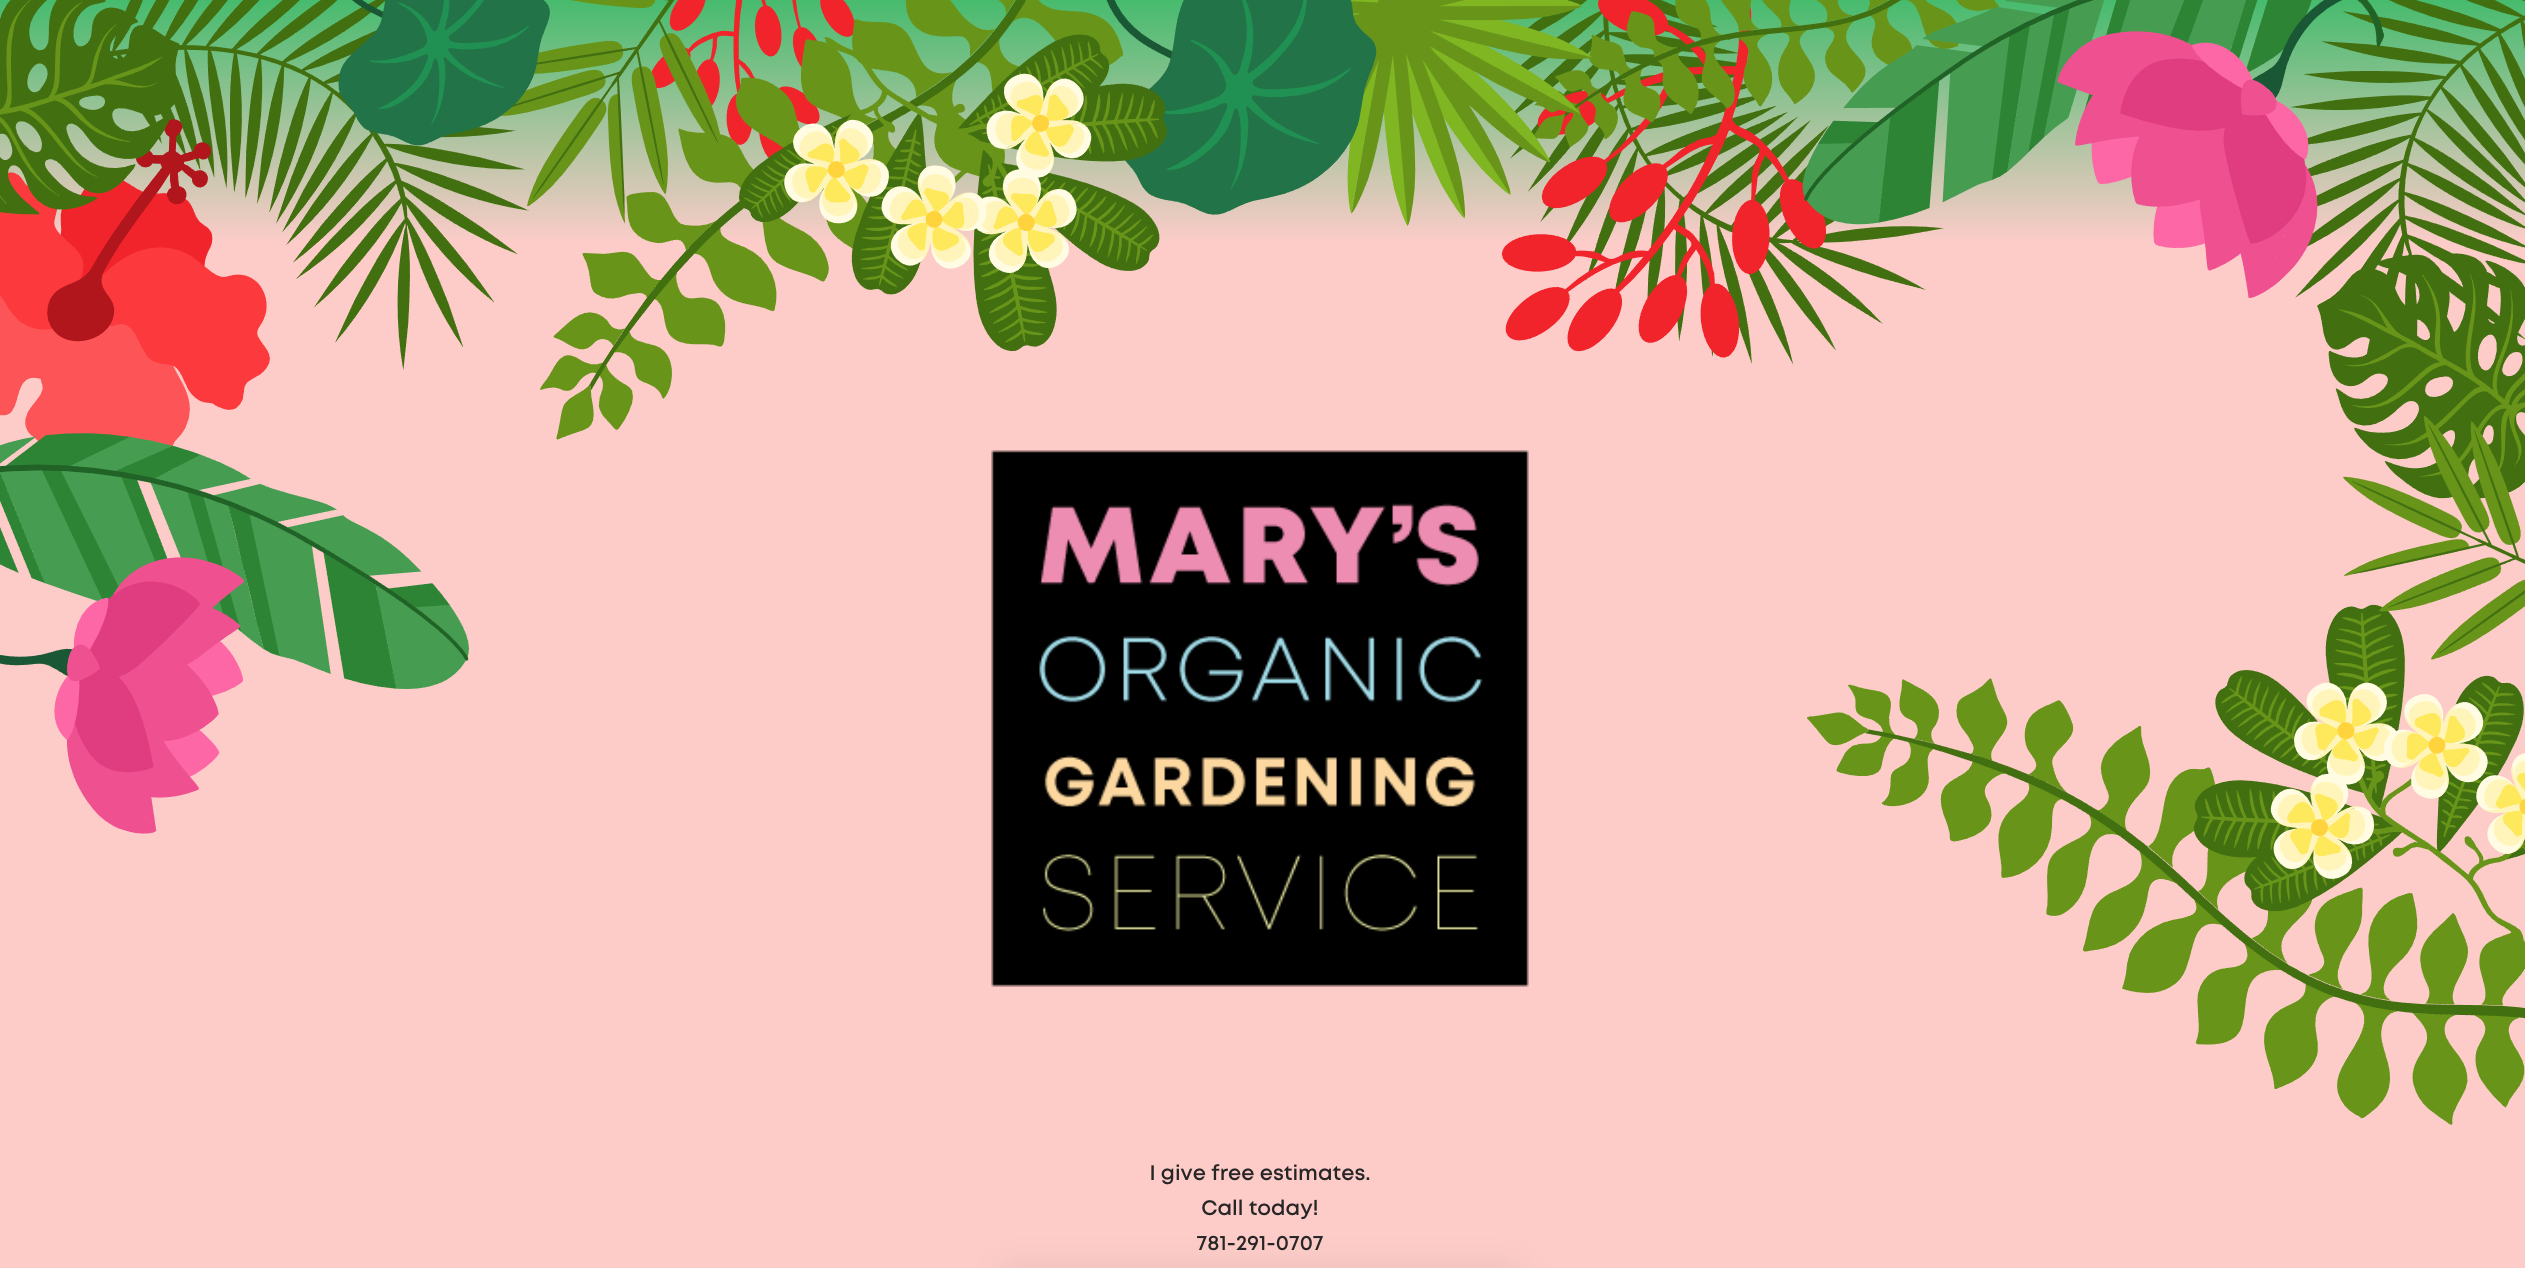 Mary's Organic Gardening Service